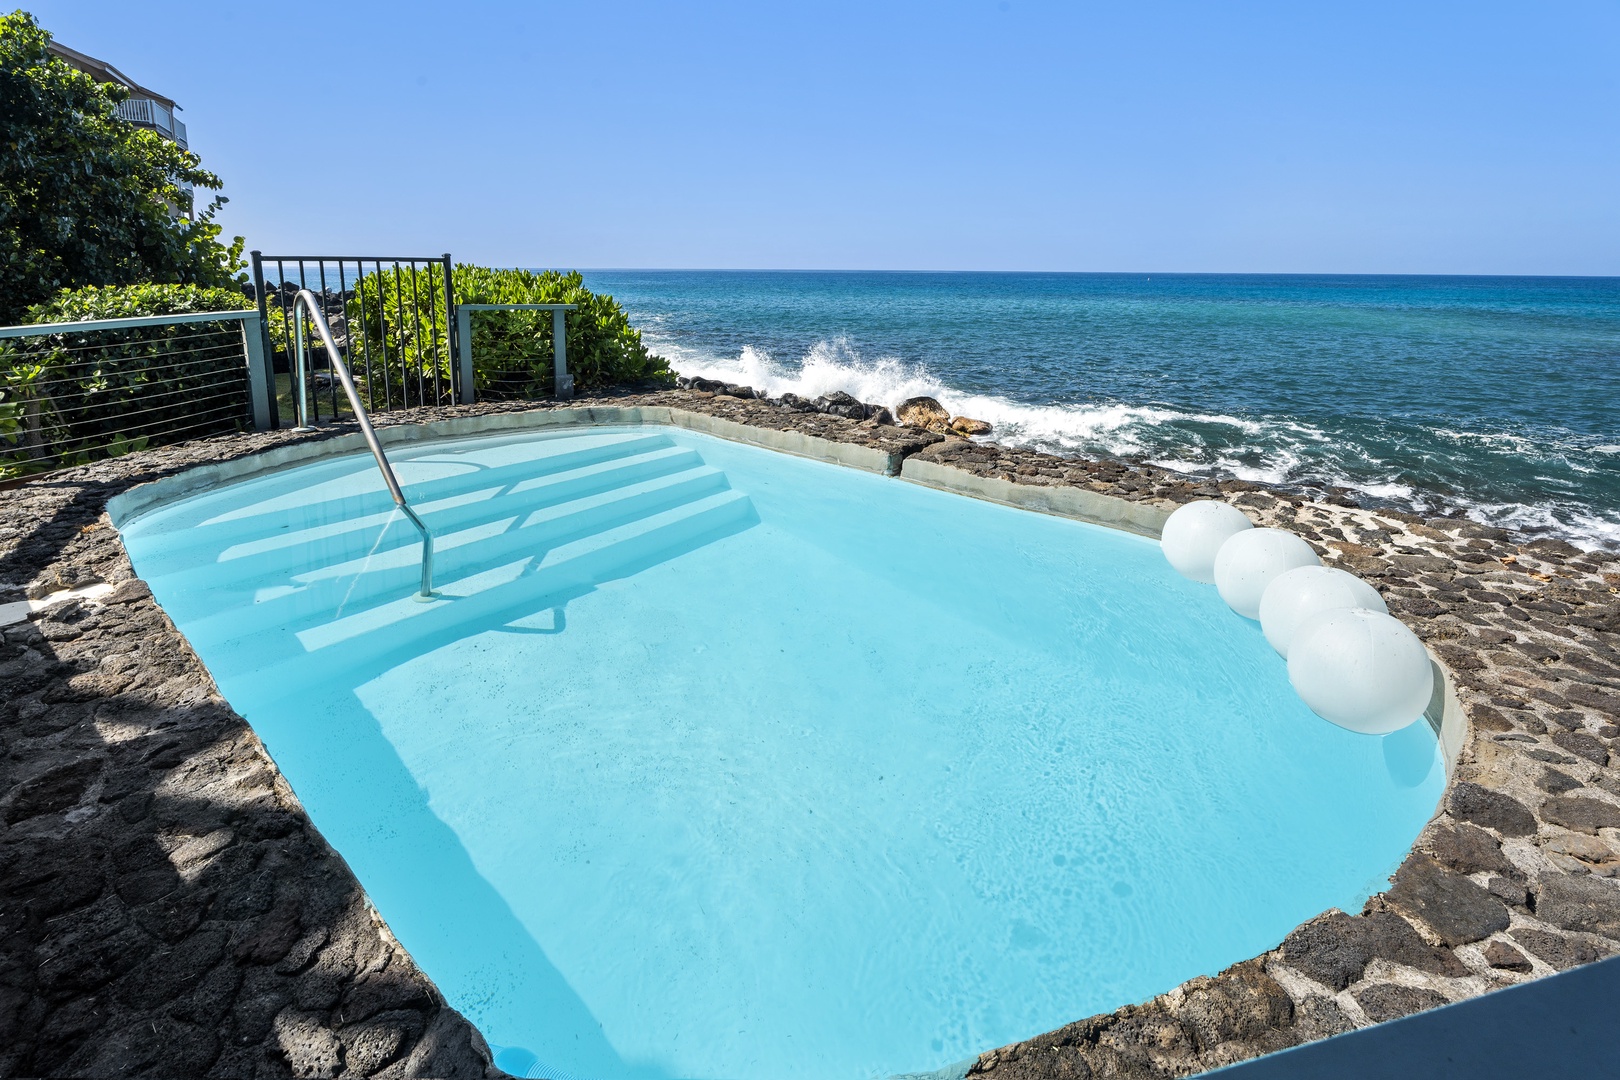 Kailua-Kona Vacation Rentals, Hale Kope Kai - Oceanside pool for your enjoyment